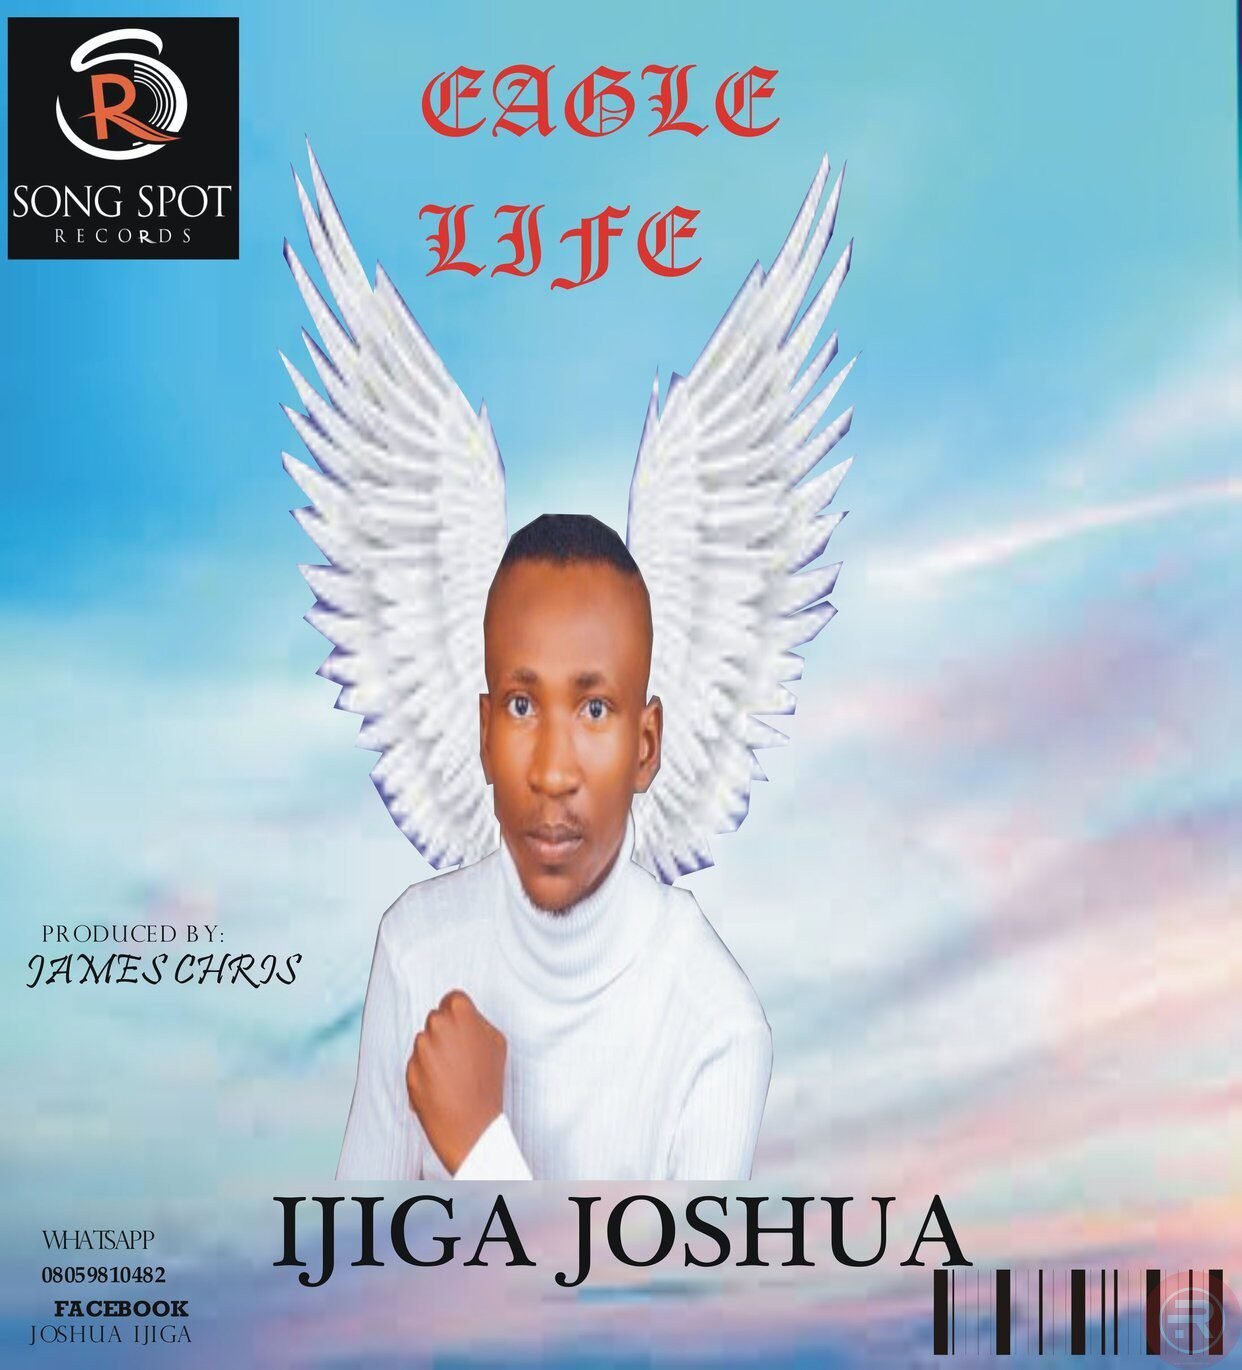 Joshua Ijiga 'Eagle Life' Mp3 Download & Lyrics 2022